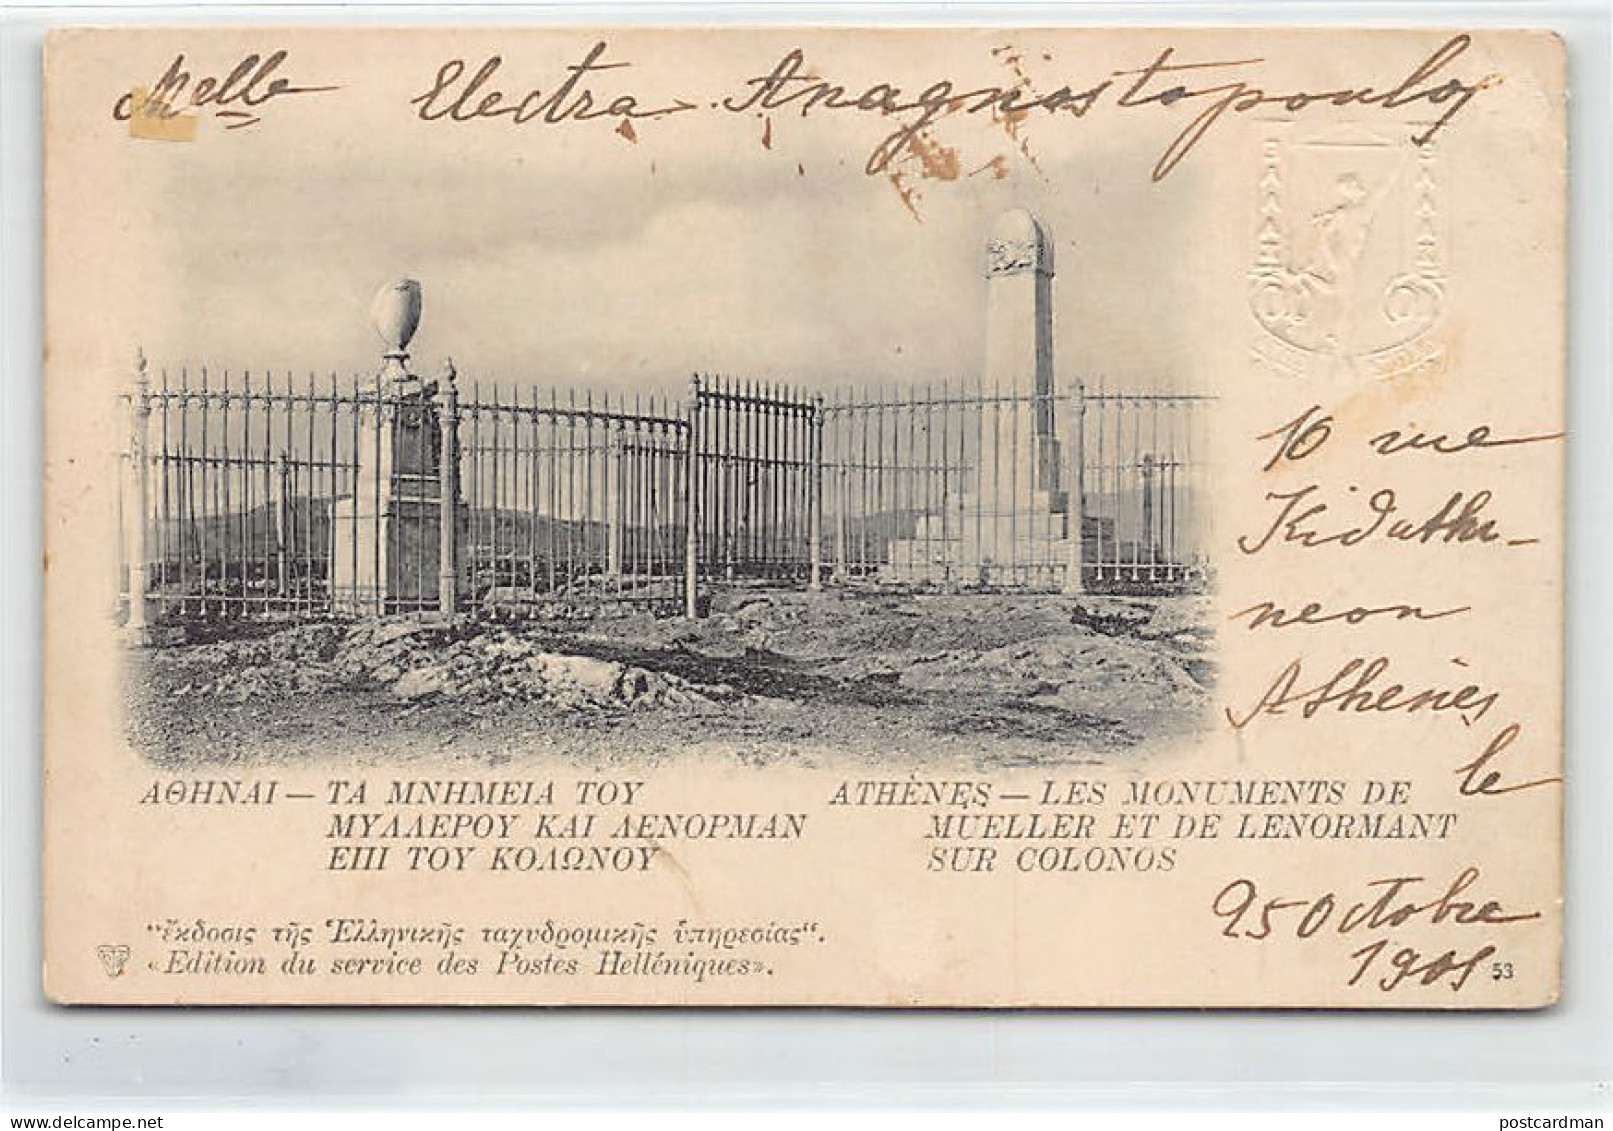 Greece - ATHENS - Lenormant And Müller Monuments In Kolonos - Publ. Service Des Postes Hélleniques 53 - Greece